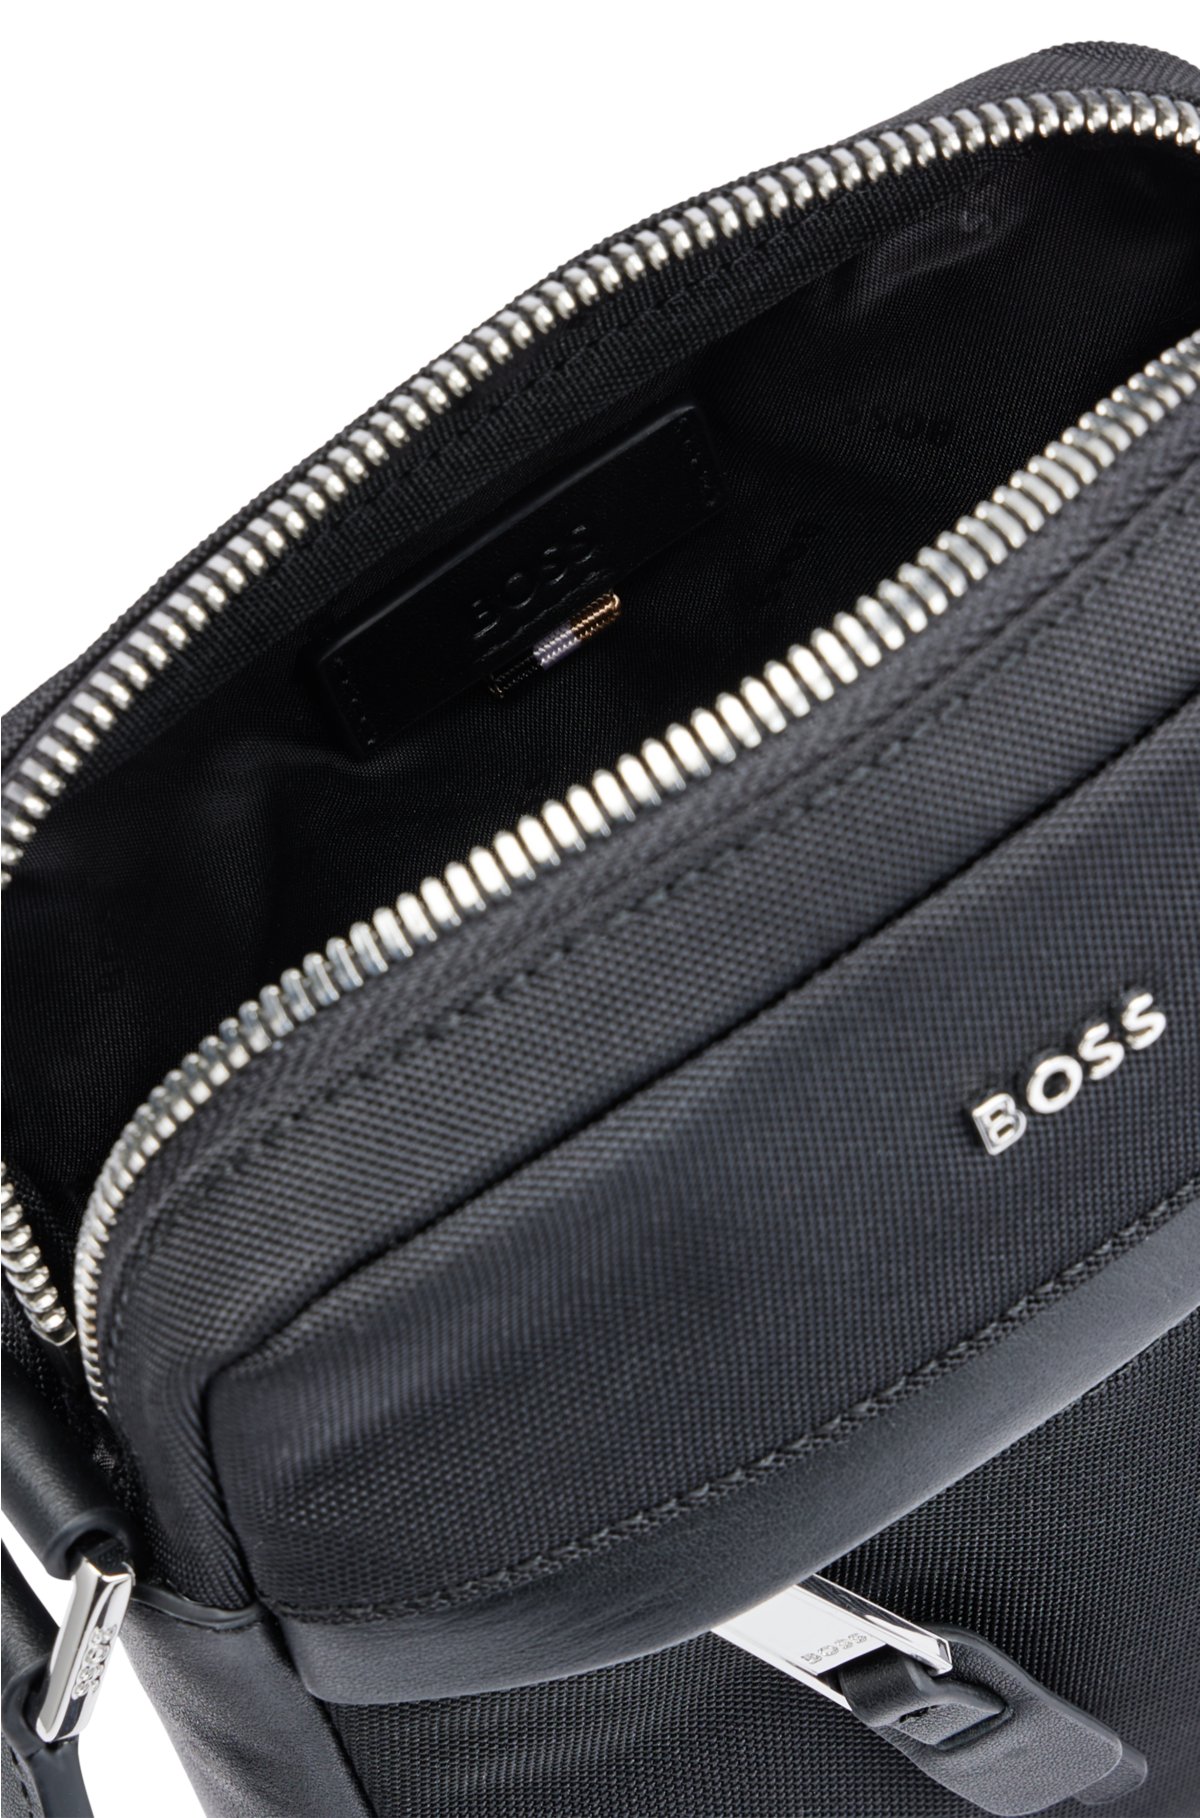 BOSS - Neoprene reporter bag with embossed and printed logos